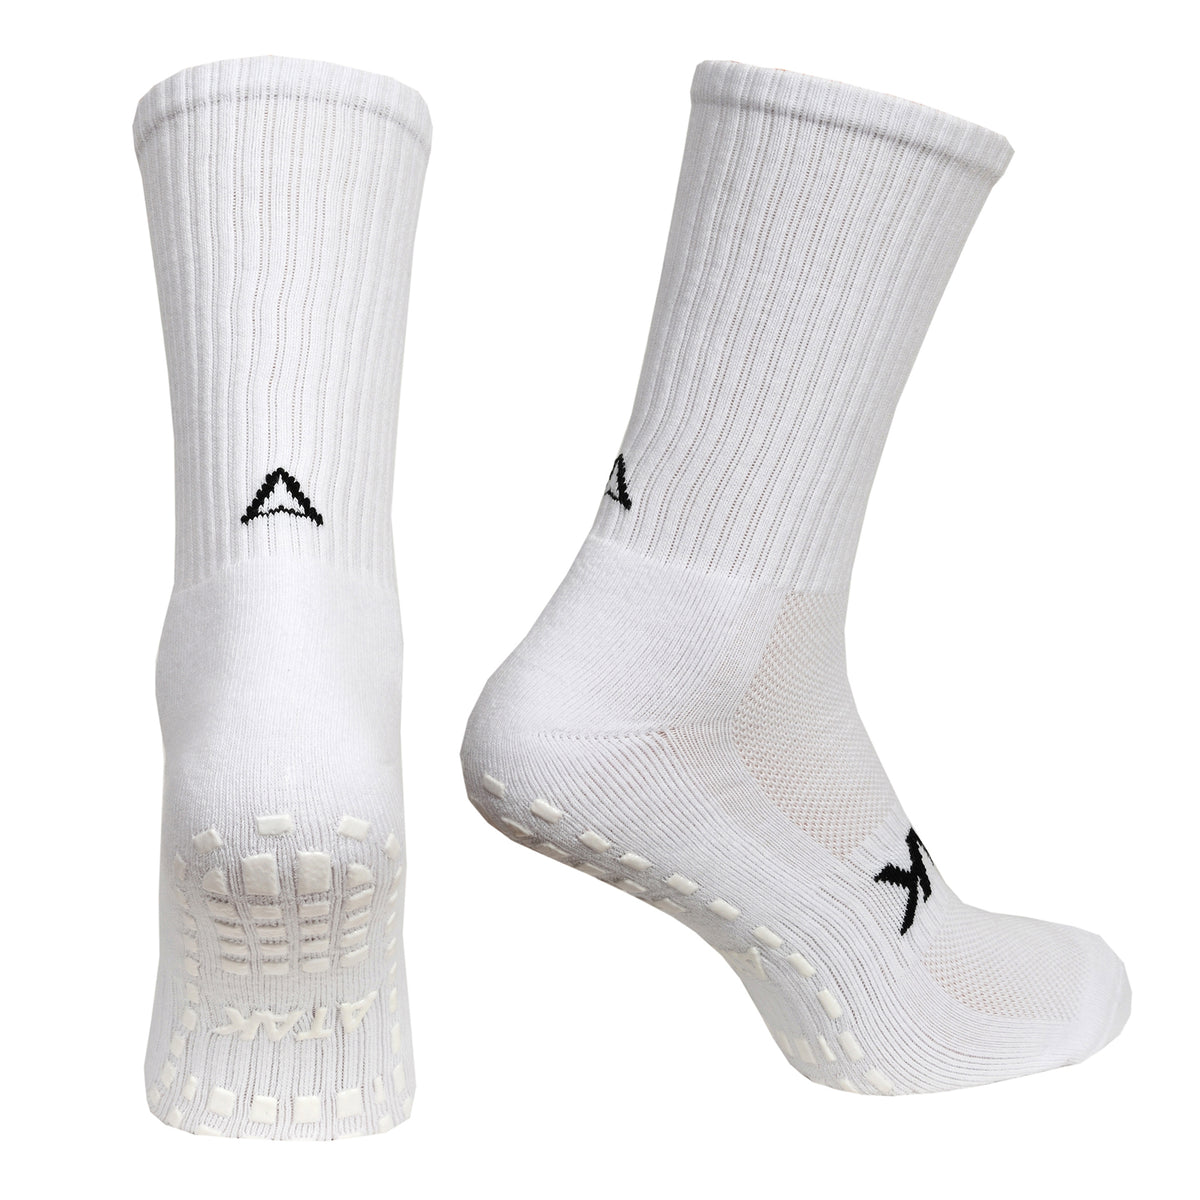 Atak Shox Midleg Grip Socks: White